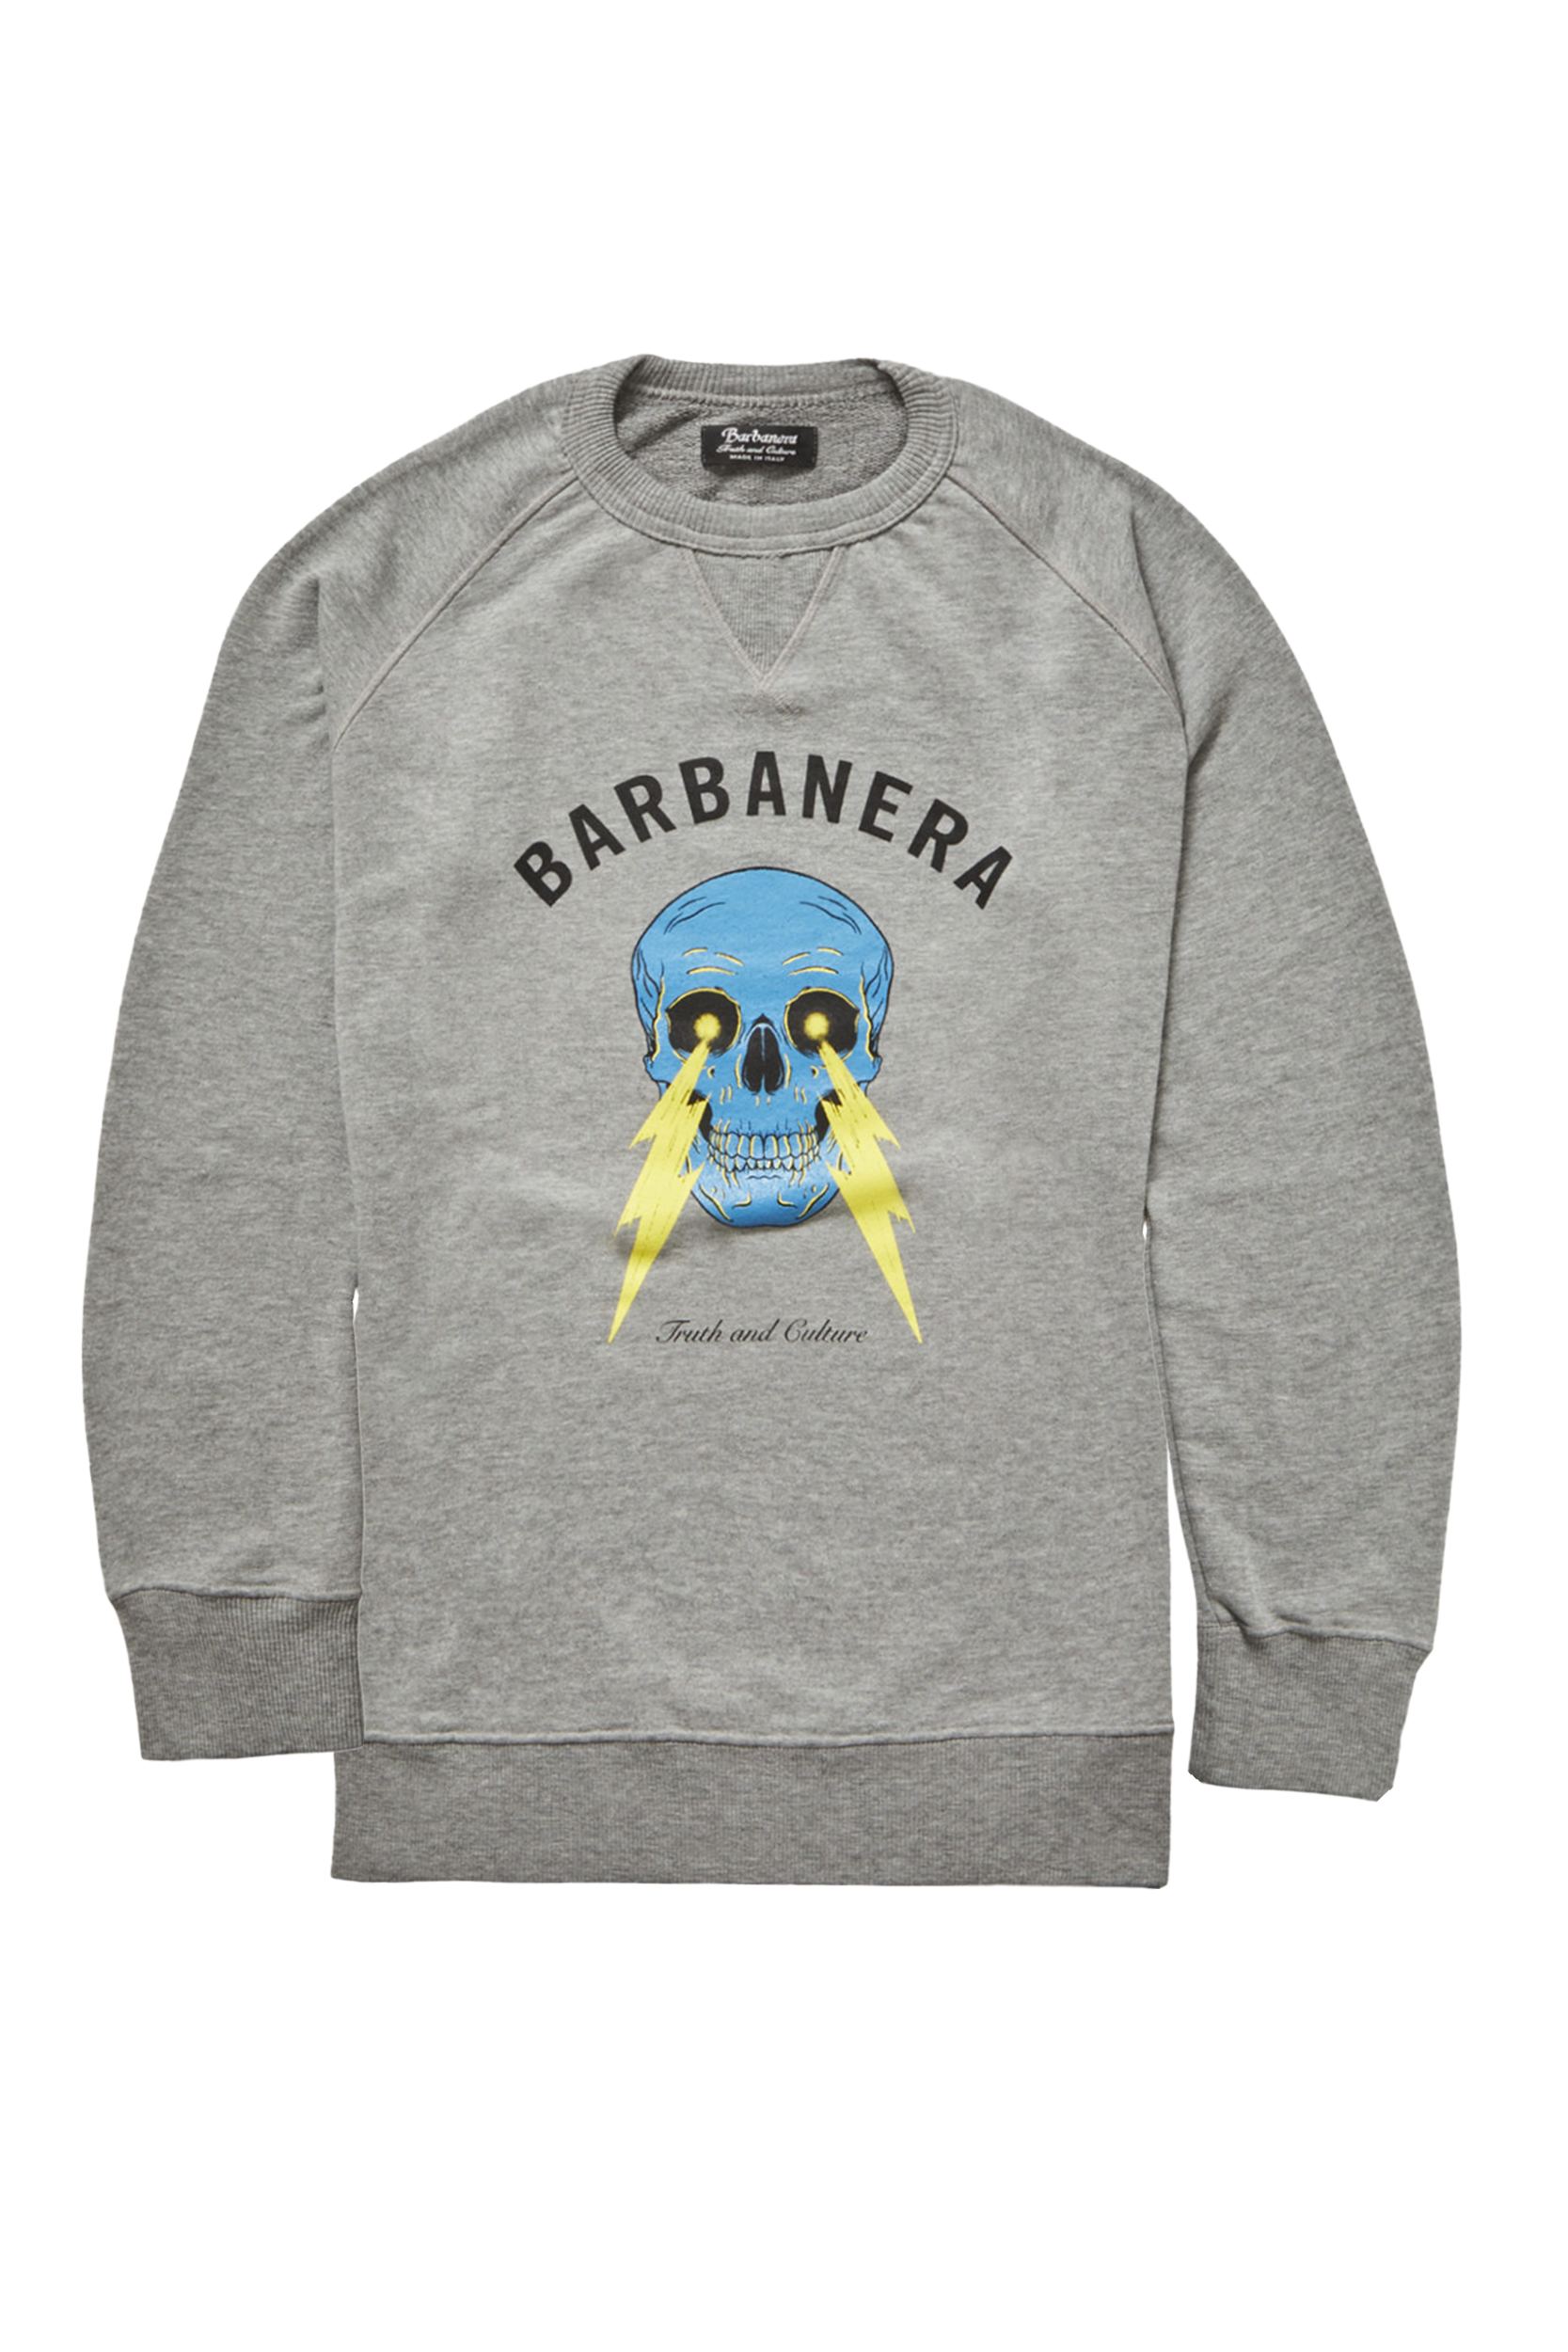 Meroni Grey Melange Crew Neck Cotton Skull And Lightning Bolt Graphic  Sweatshirt - Barbanera